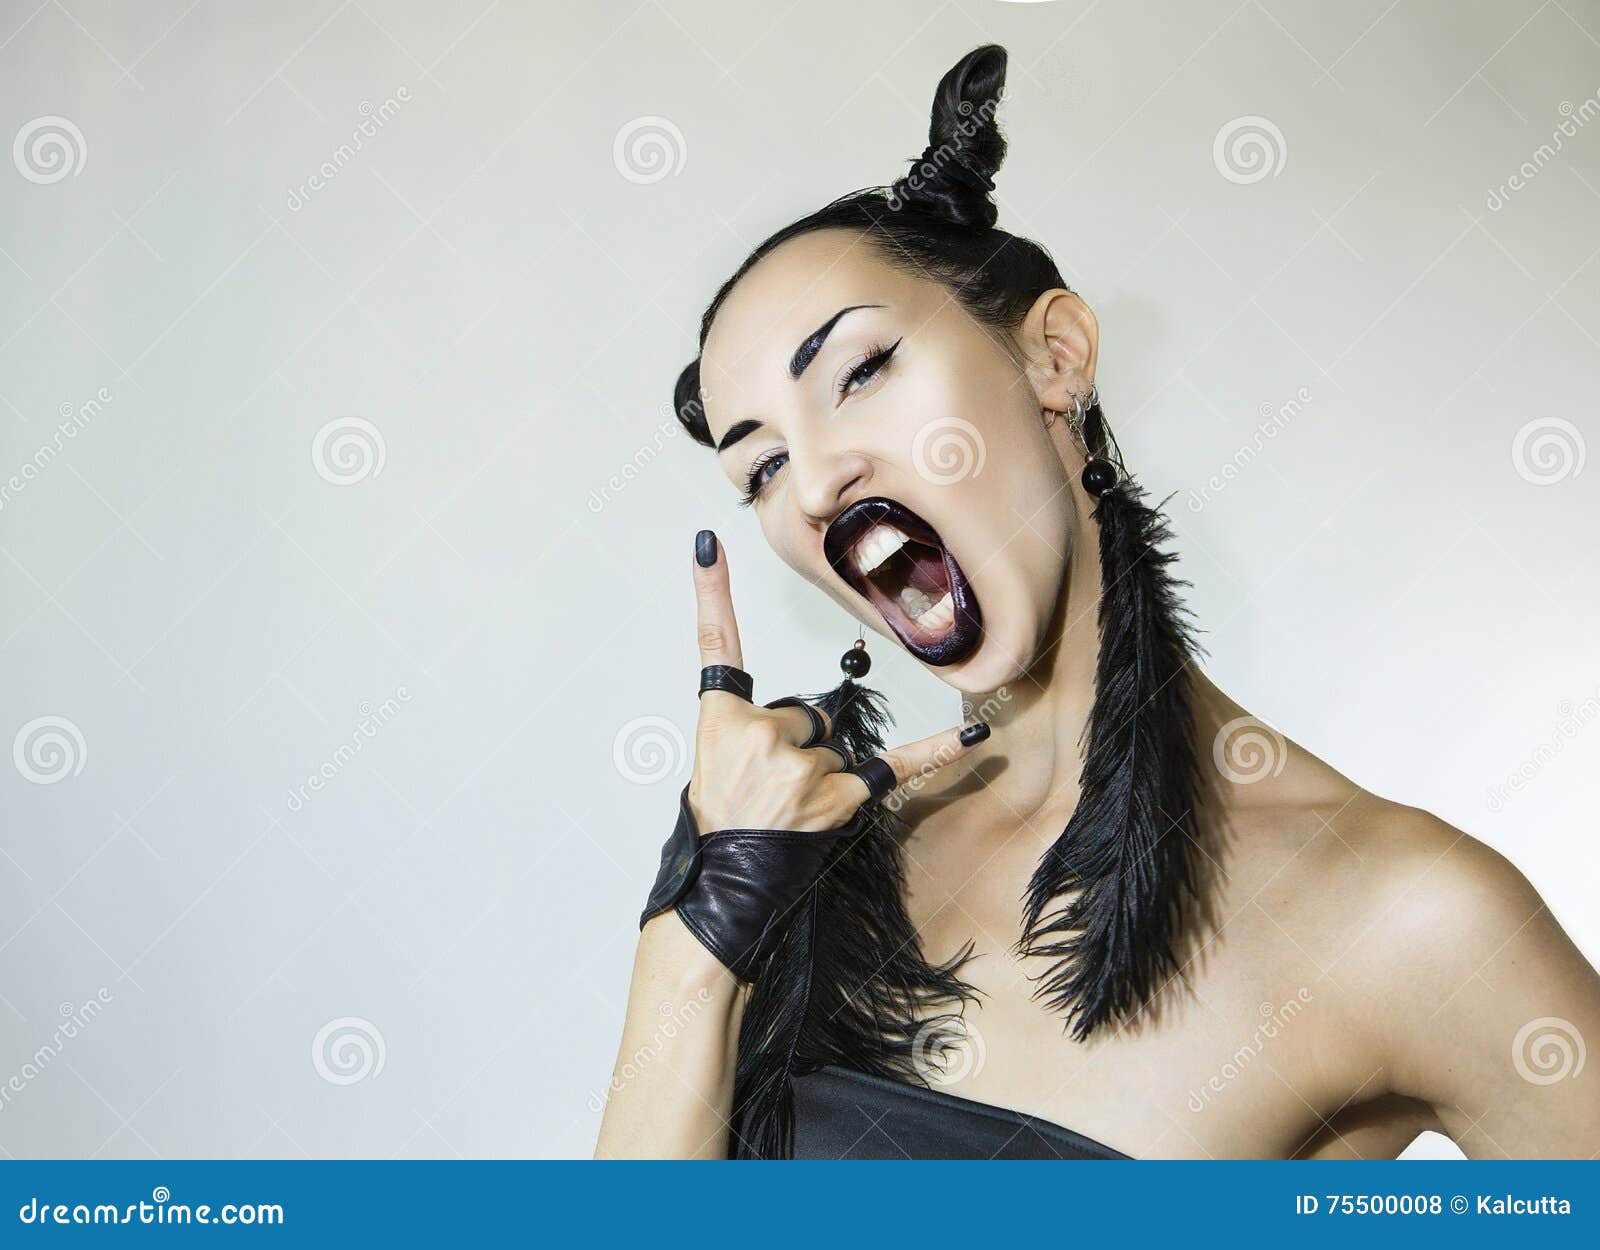 Beautiful Stylish Emotional Woman Face Stock Photo - Image of energetic ...